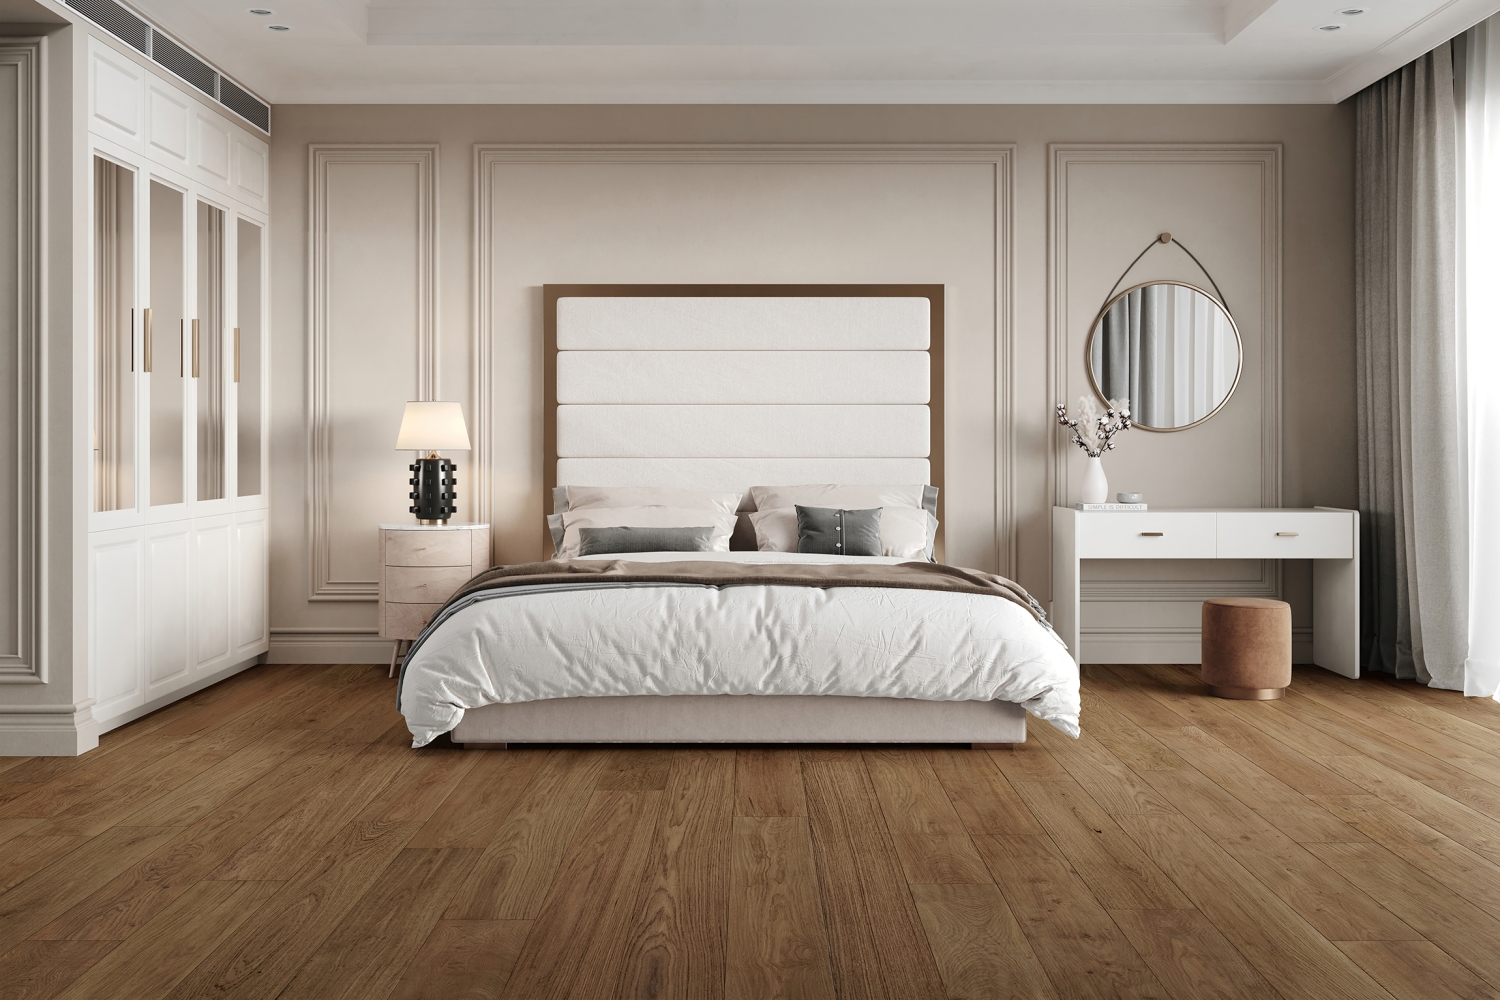 Wood Bedroom Floor 3D Visualization